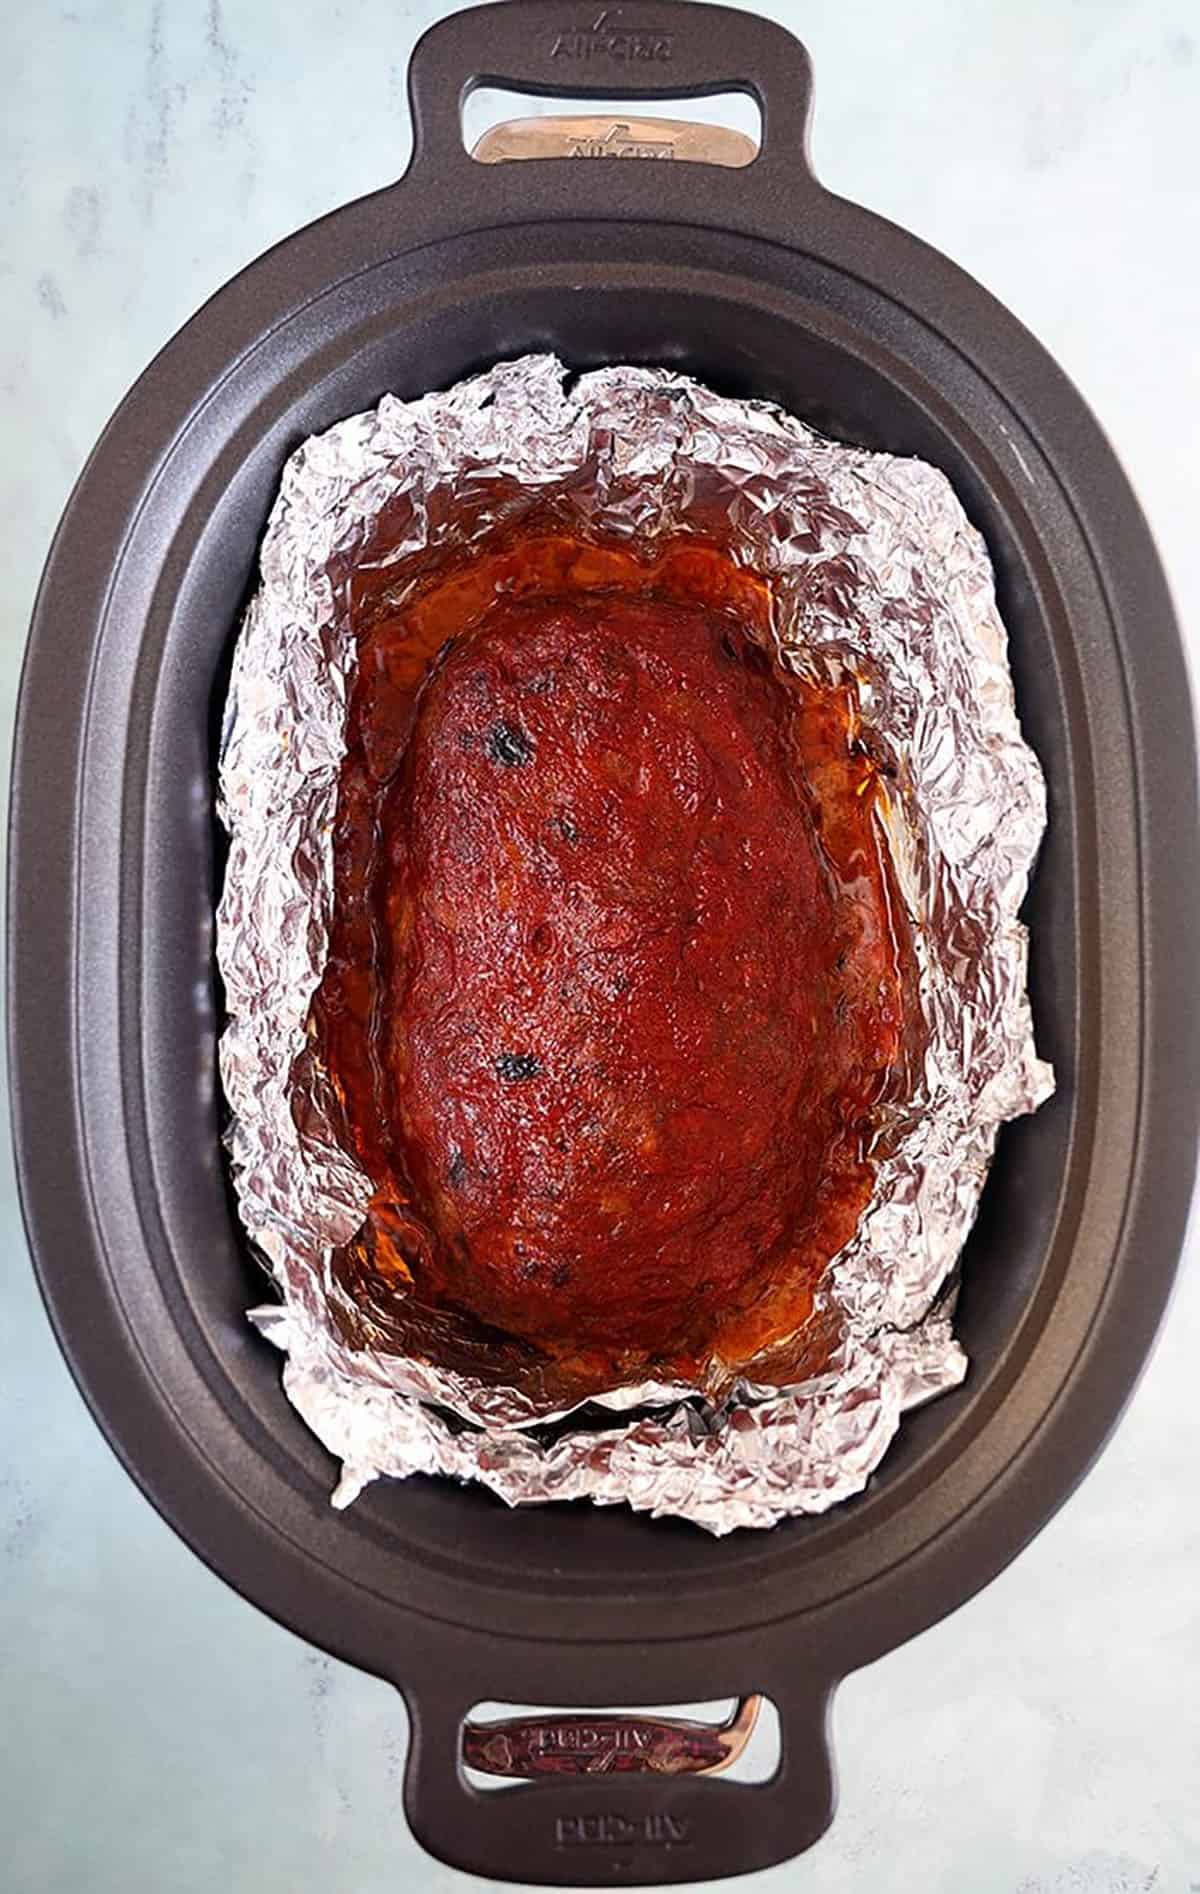 Crockpot with a meatloaf in foil inside the crockpot.